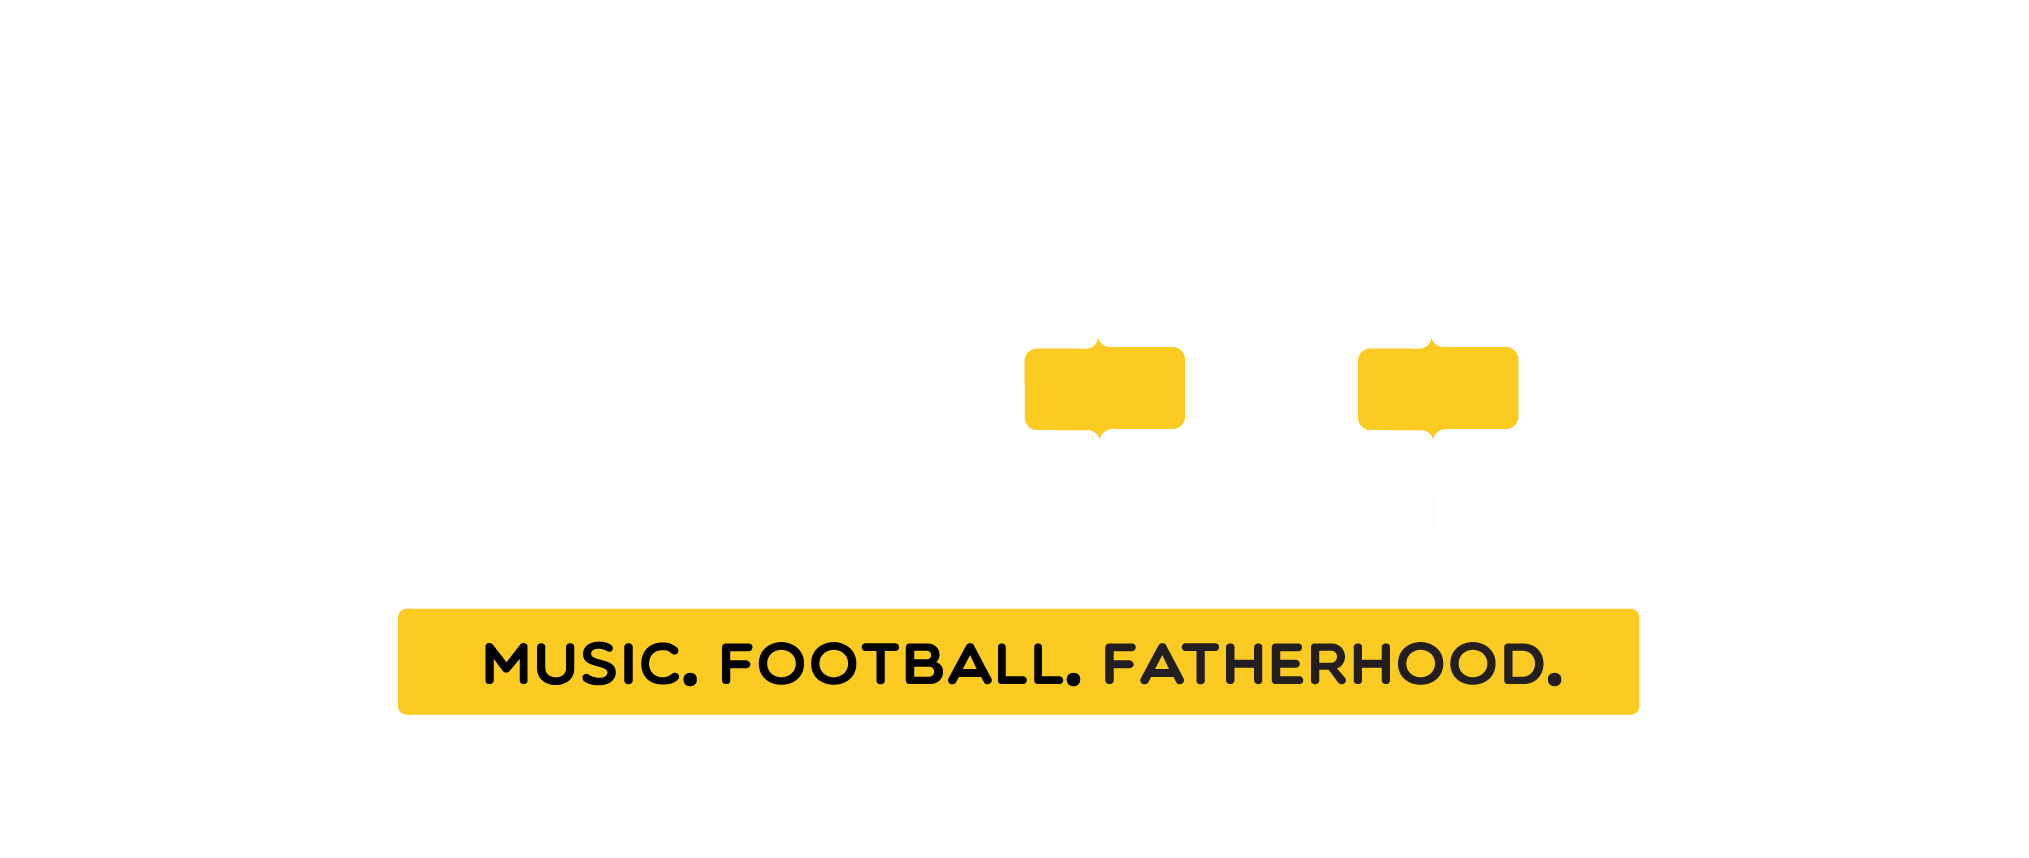 Music Fatherhood Football